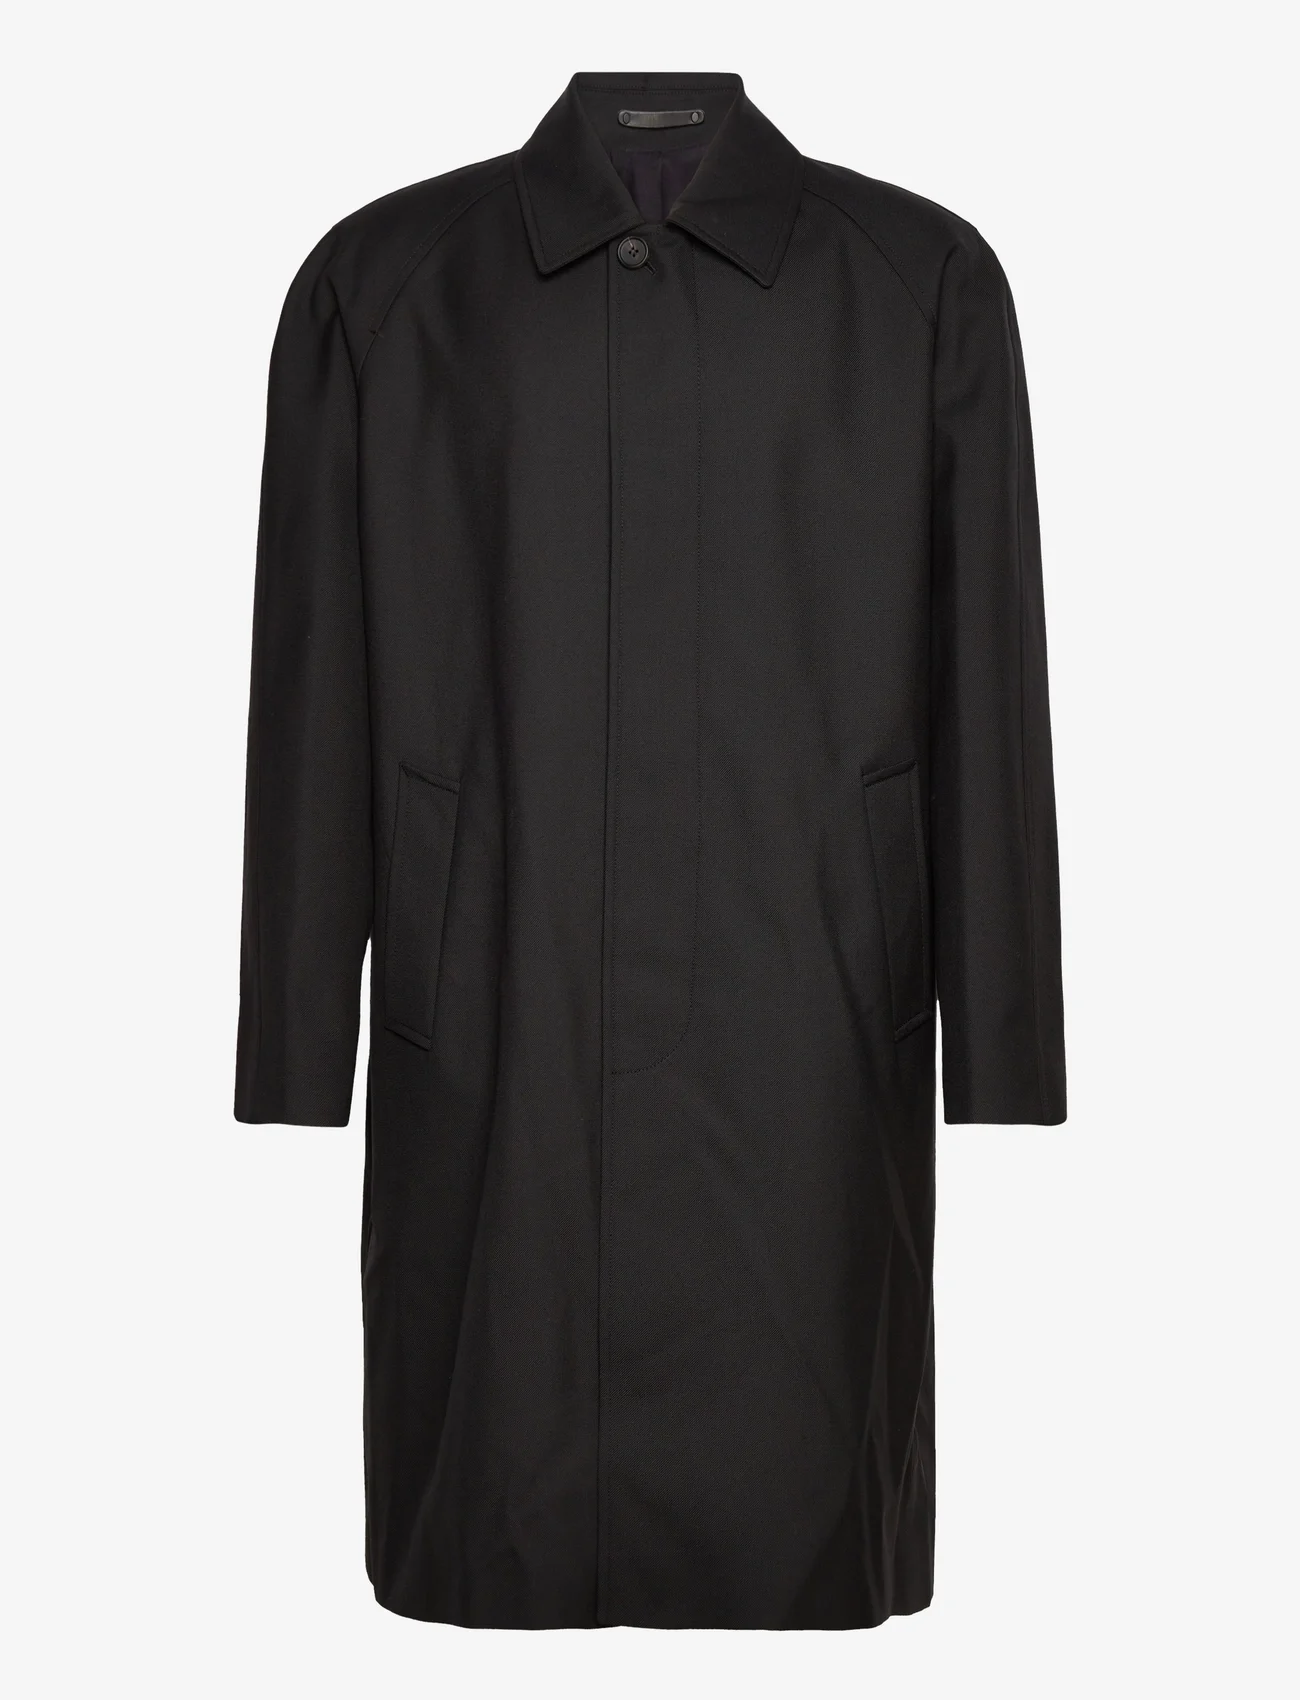 AllSaints - LESTER COAT - winter jackets - black - 0